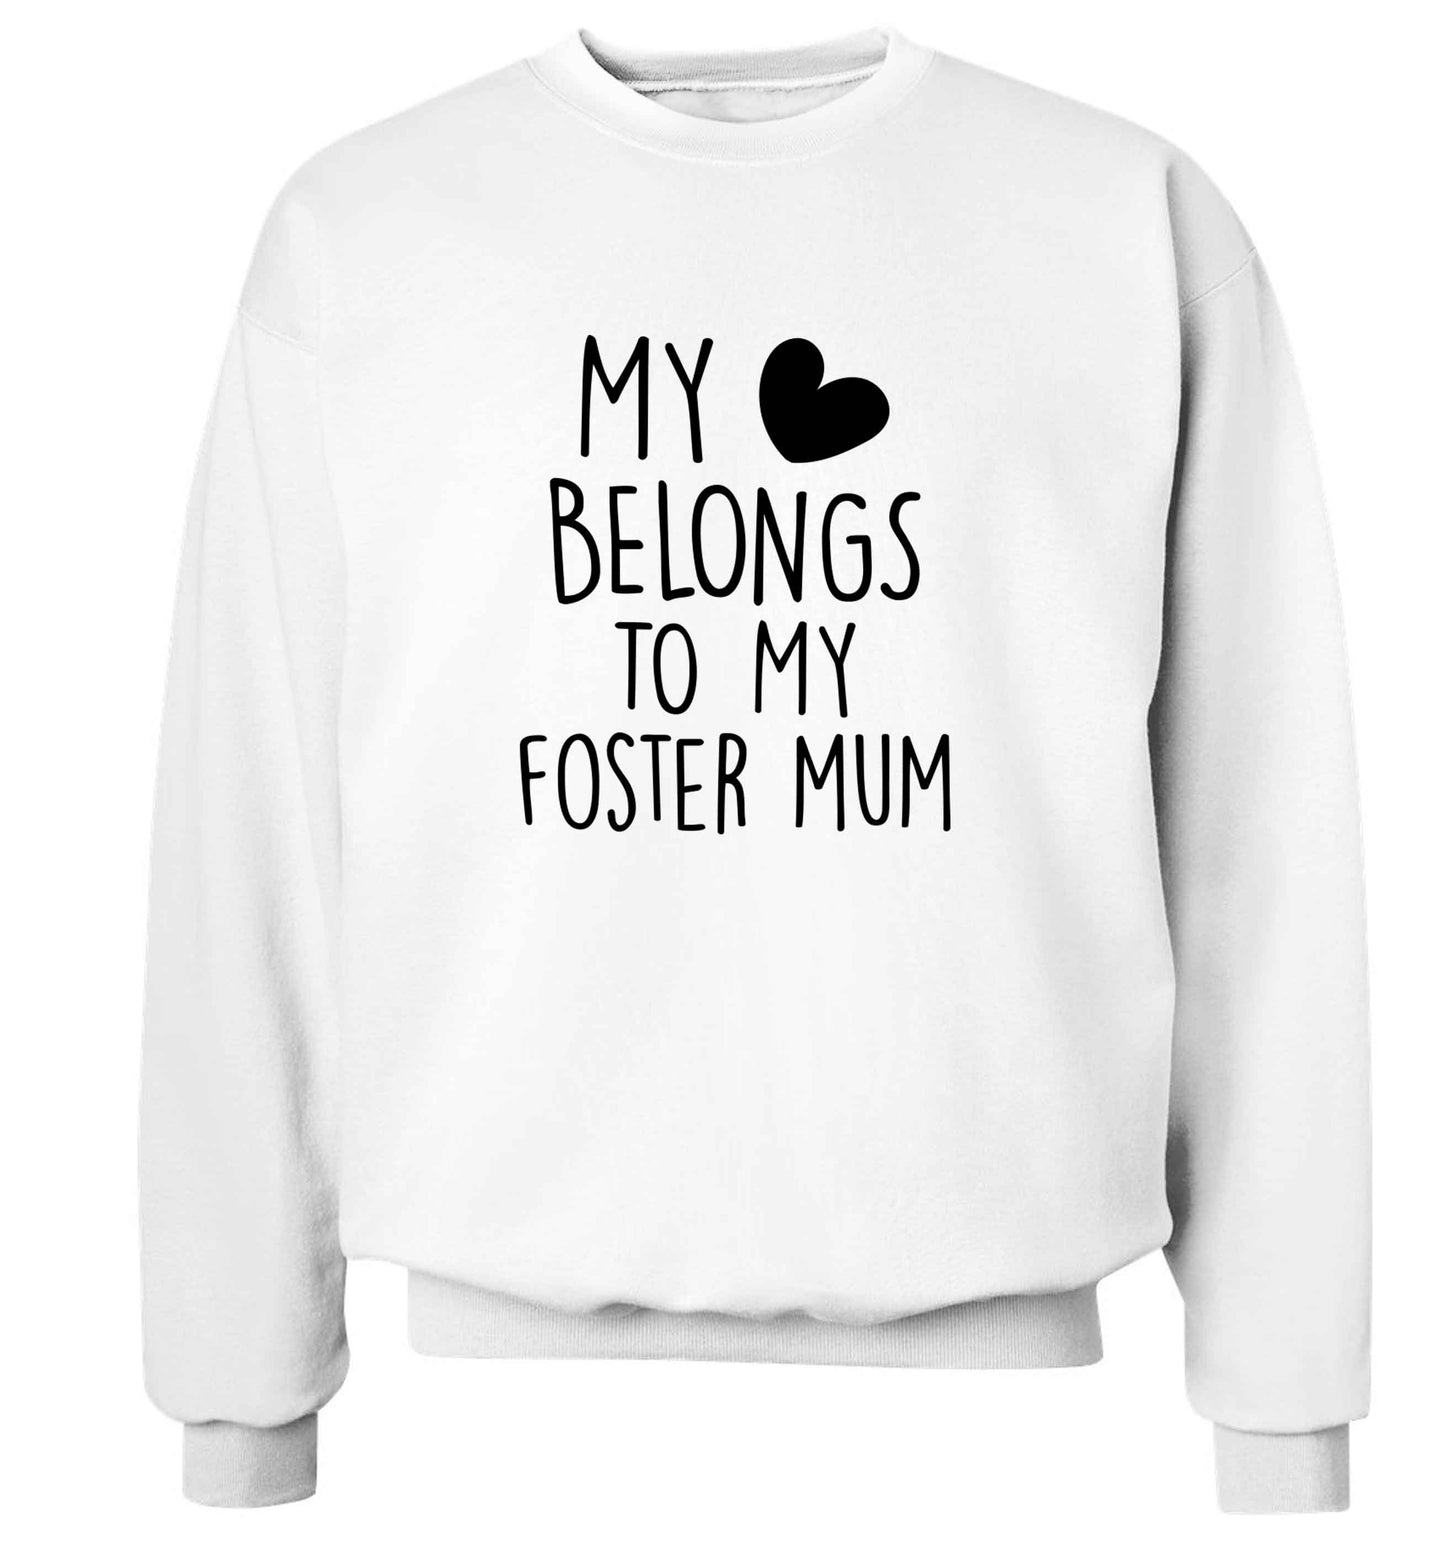 My heart belongs to my foster mum adult's unisex white sweater 2XL